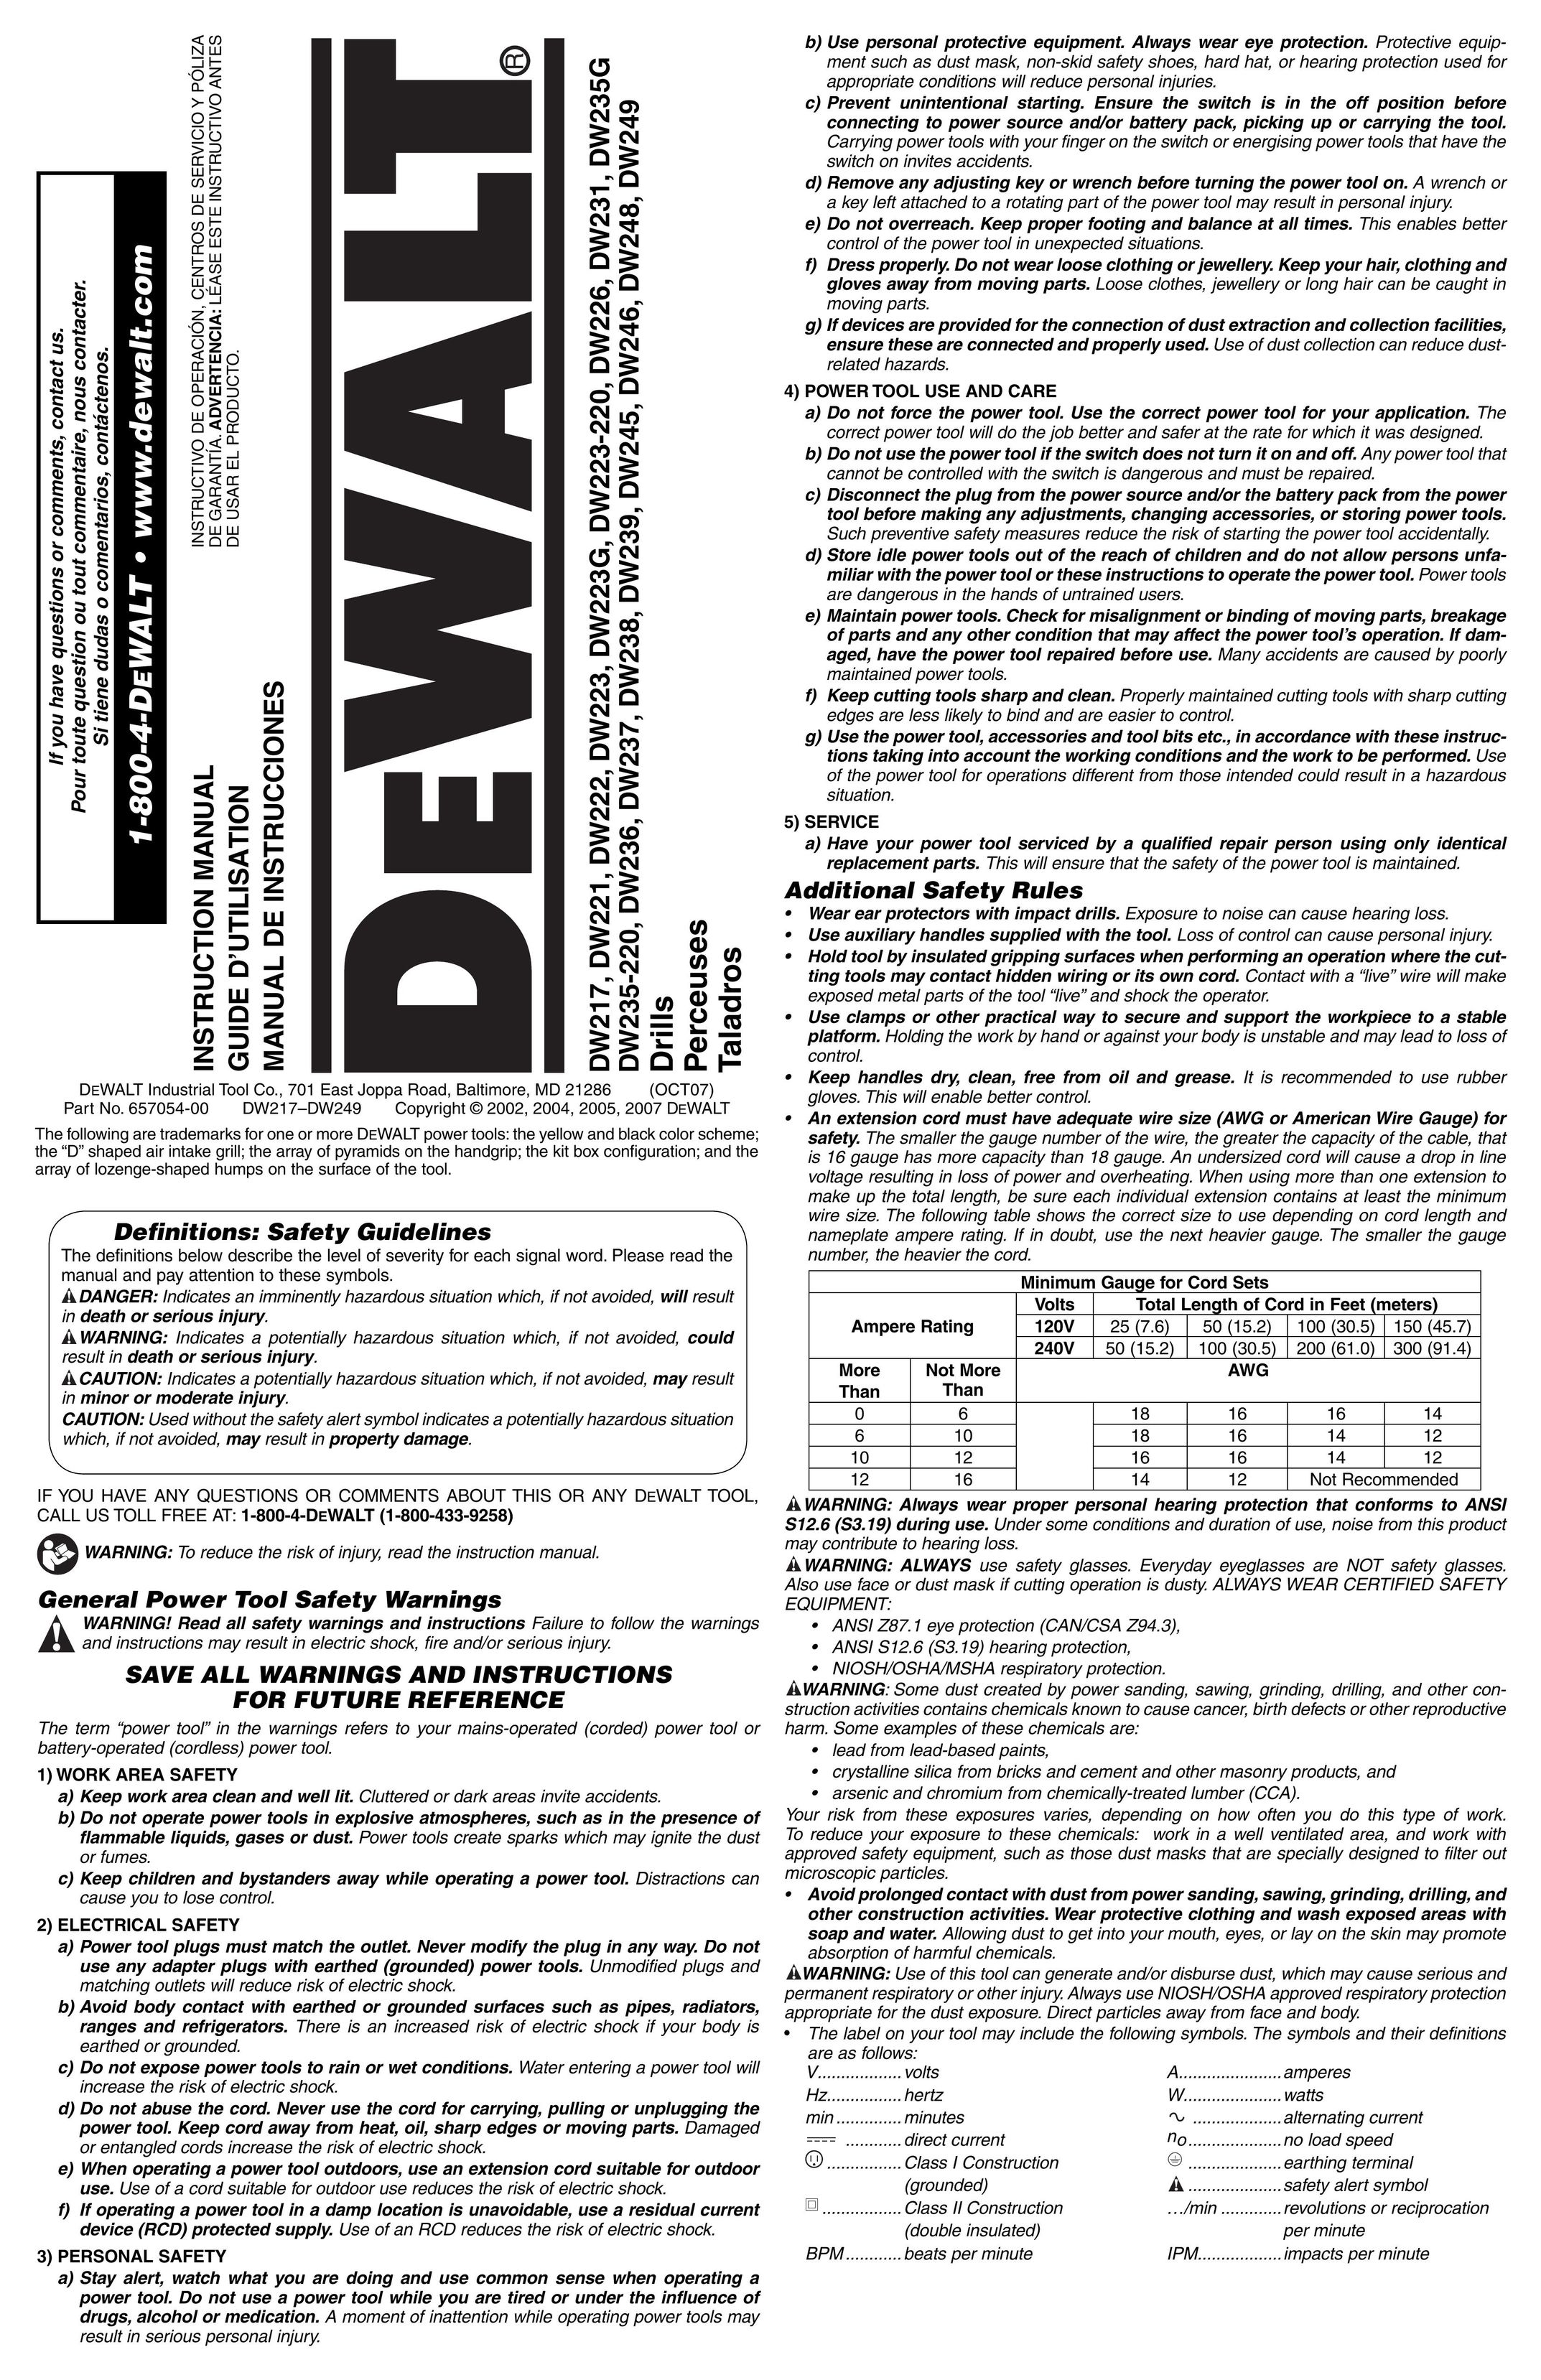 DeWalt DW249 Drill User Manual